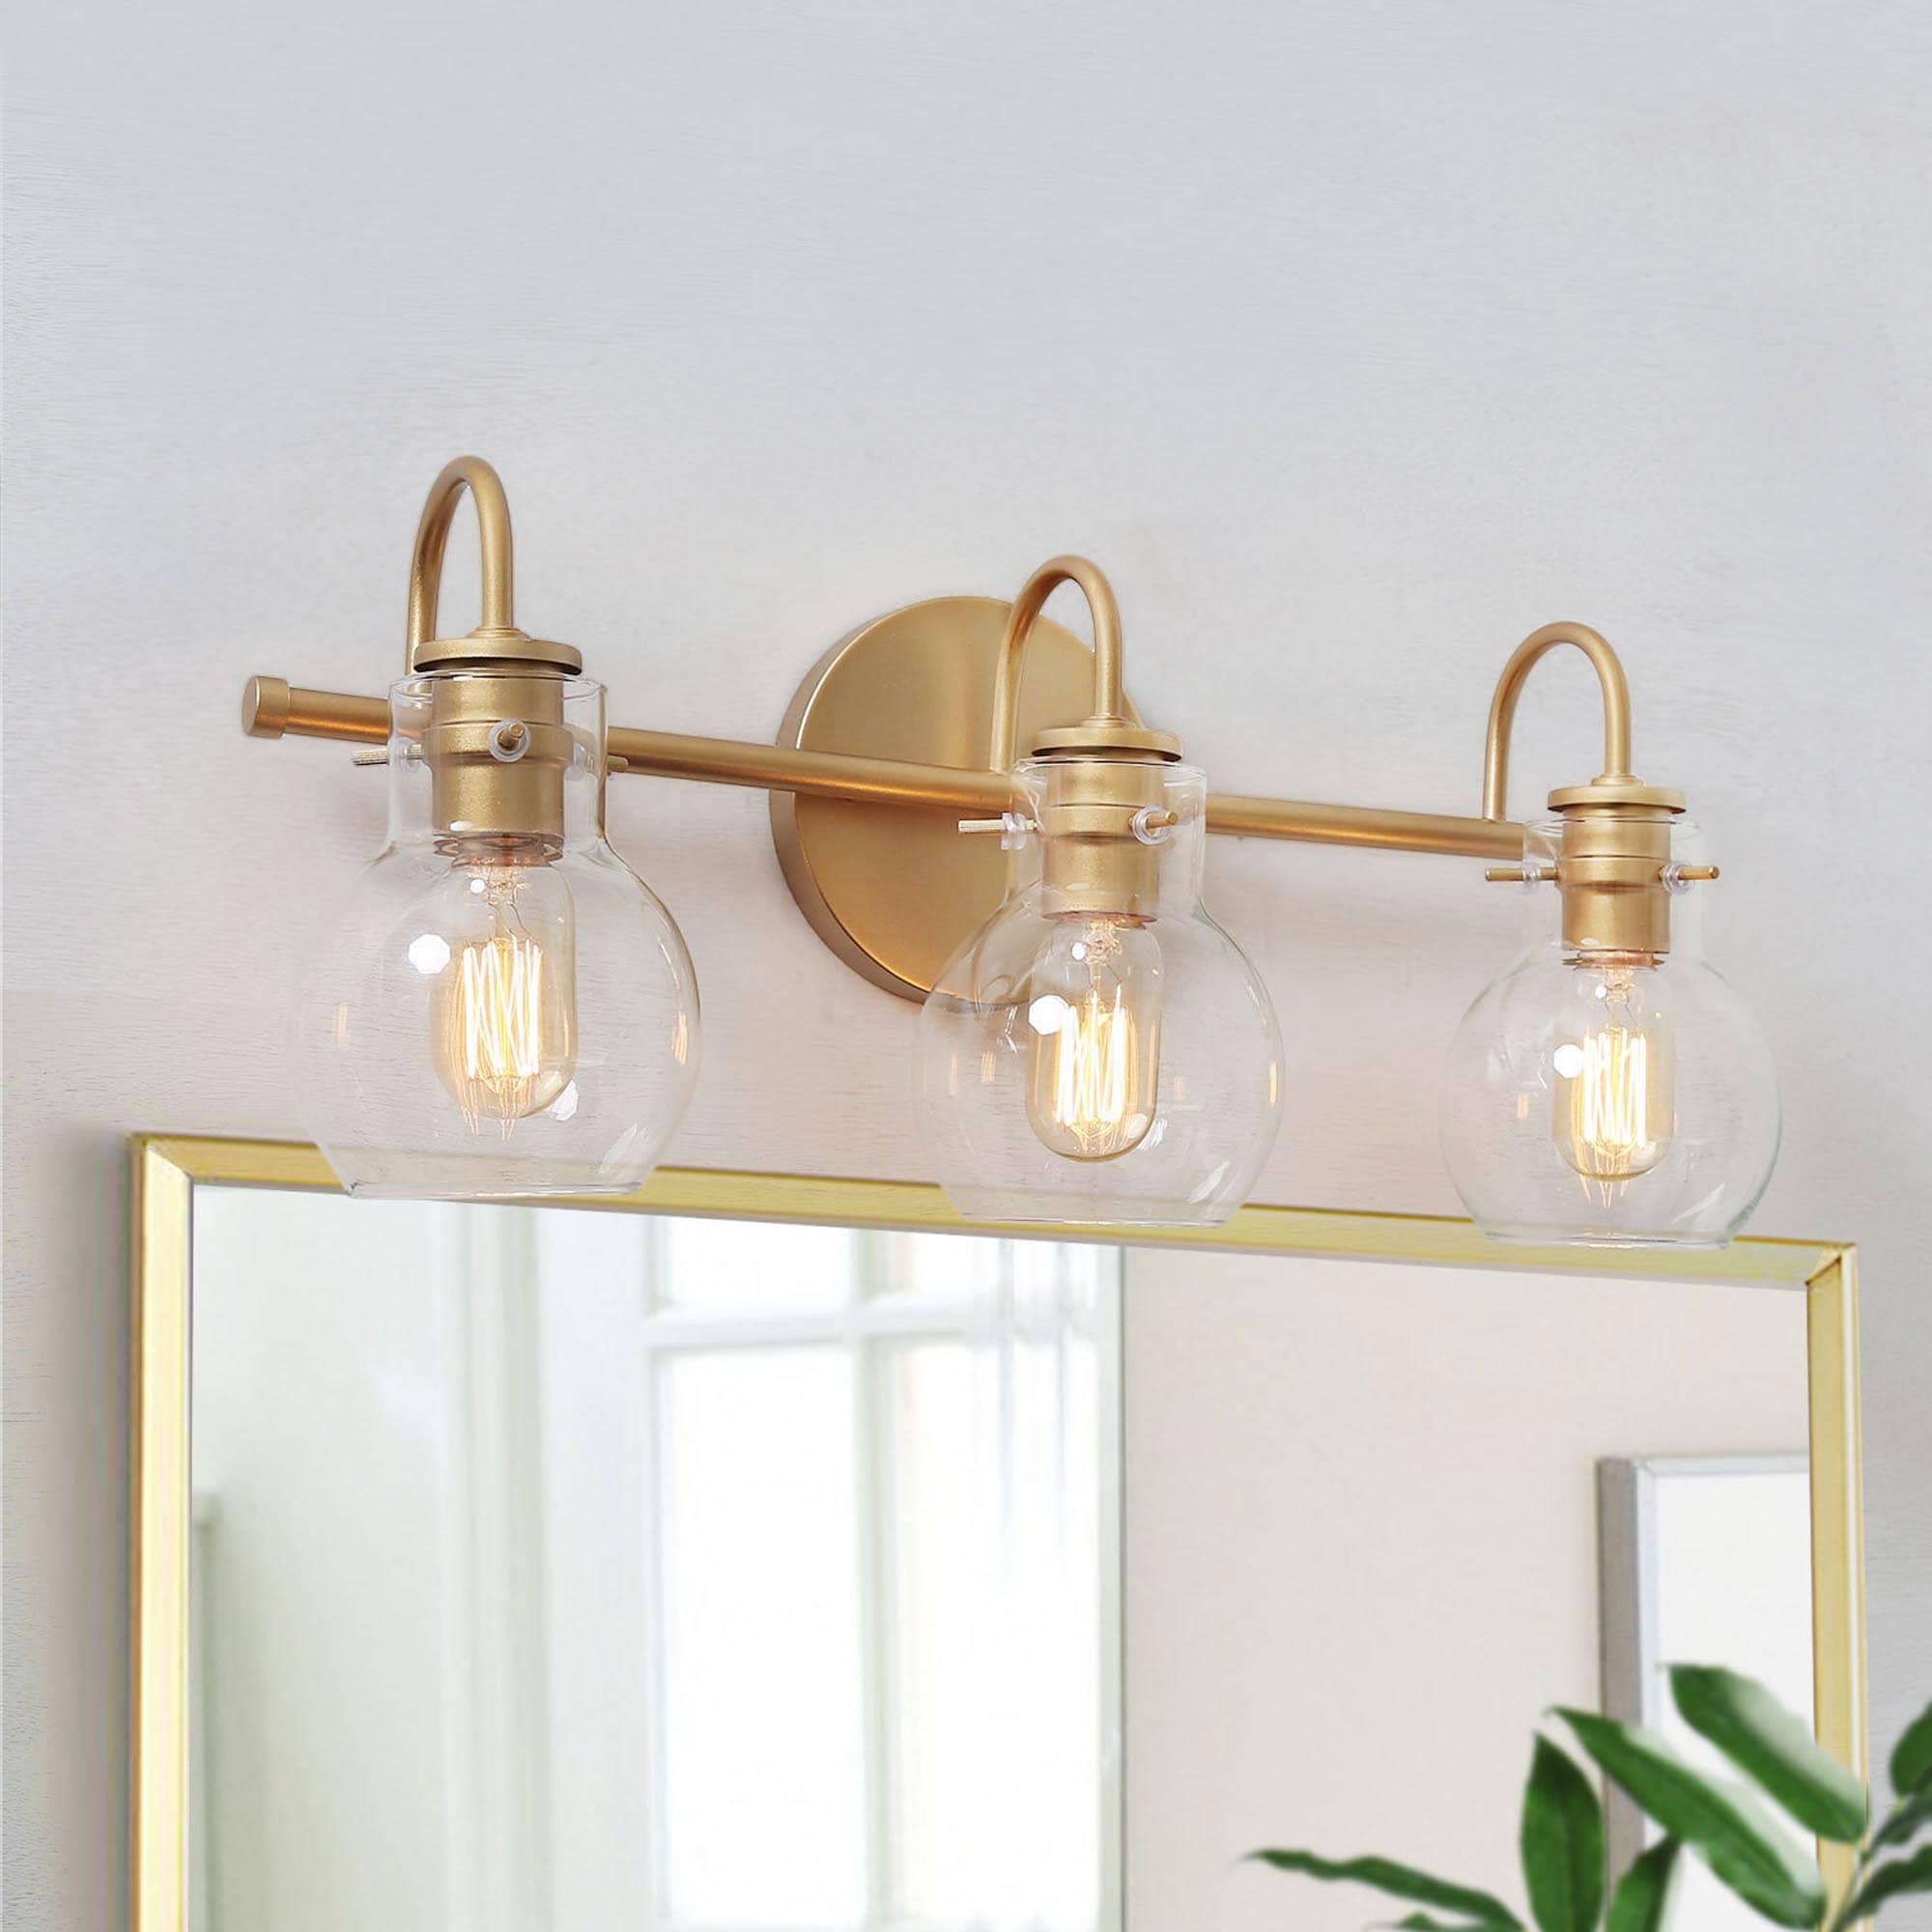 Modern Gold 3 Light Bathroom Vanity Lights Glass Wall Sconces Overstock 32038793 L22xw7xh9